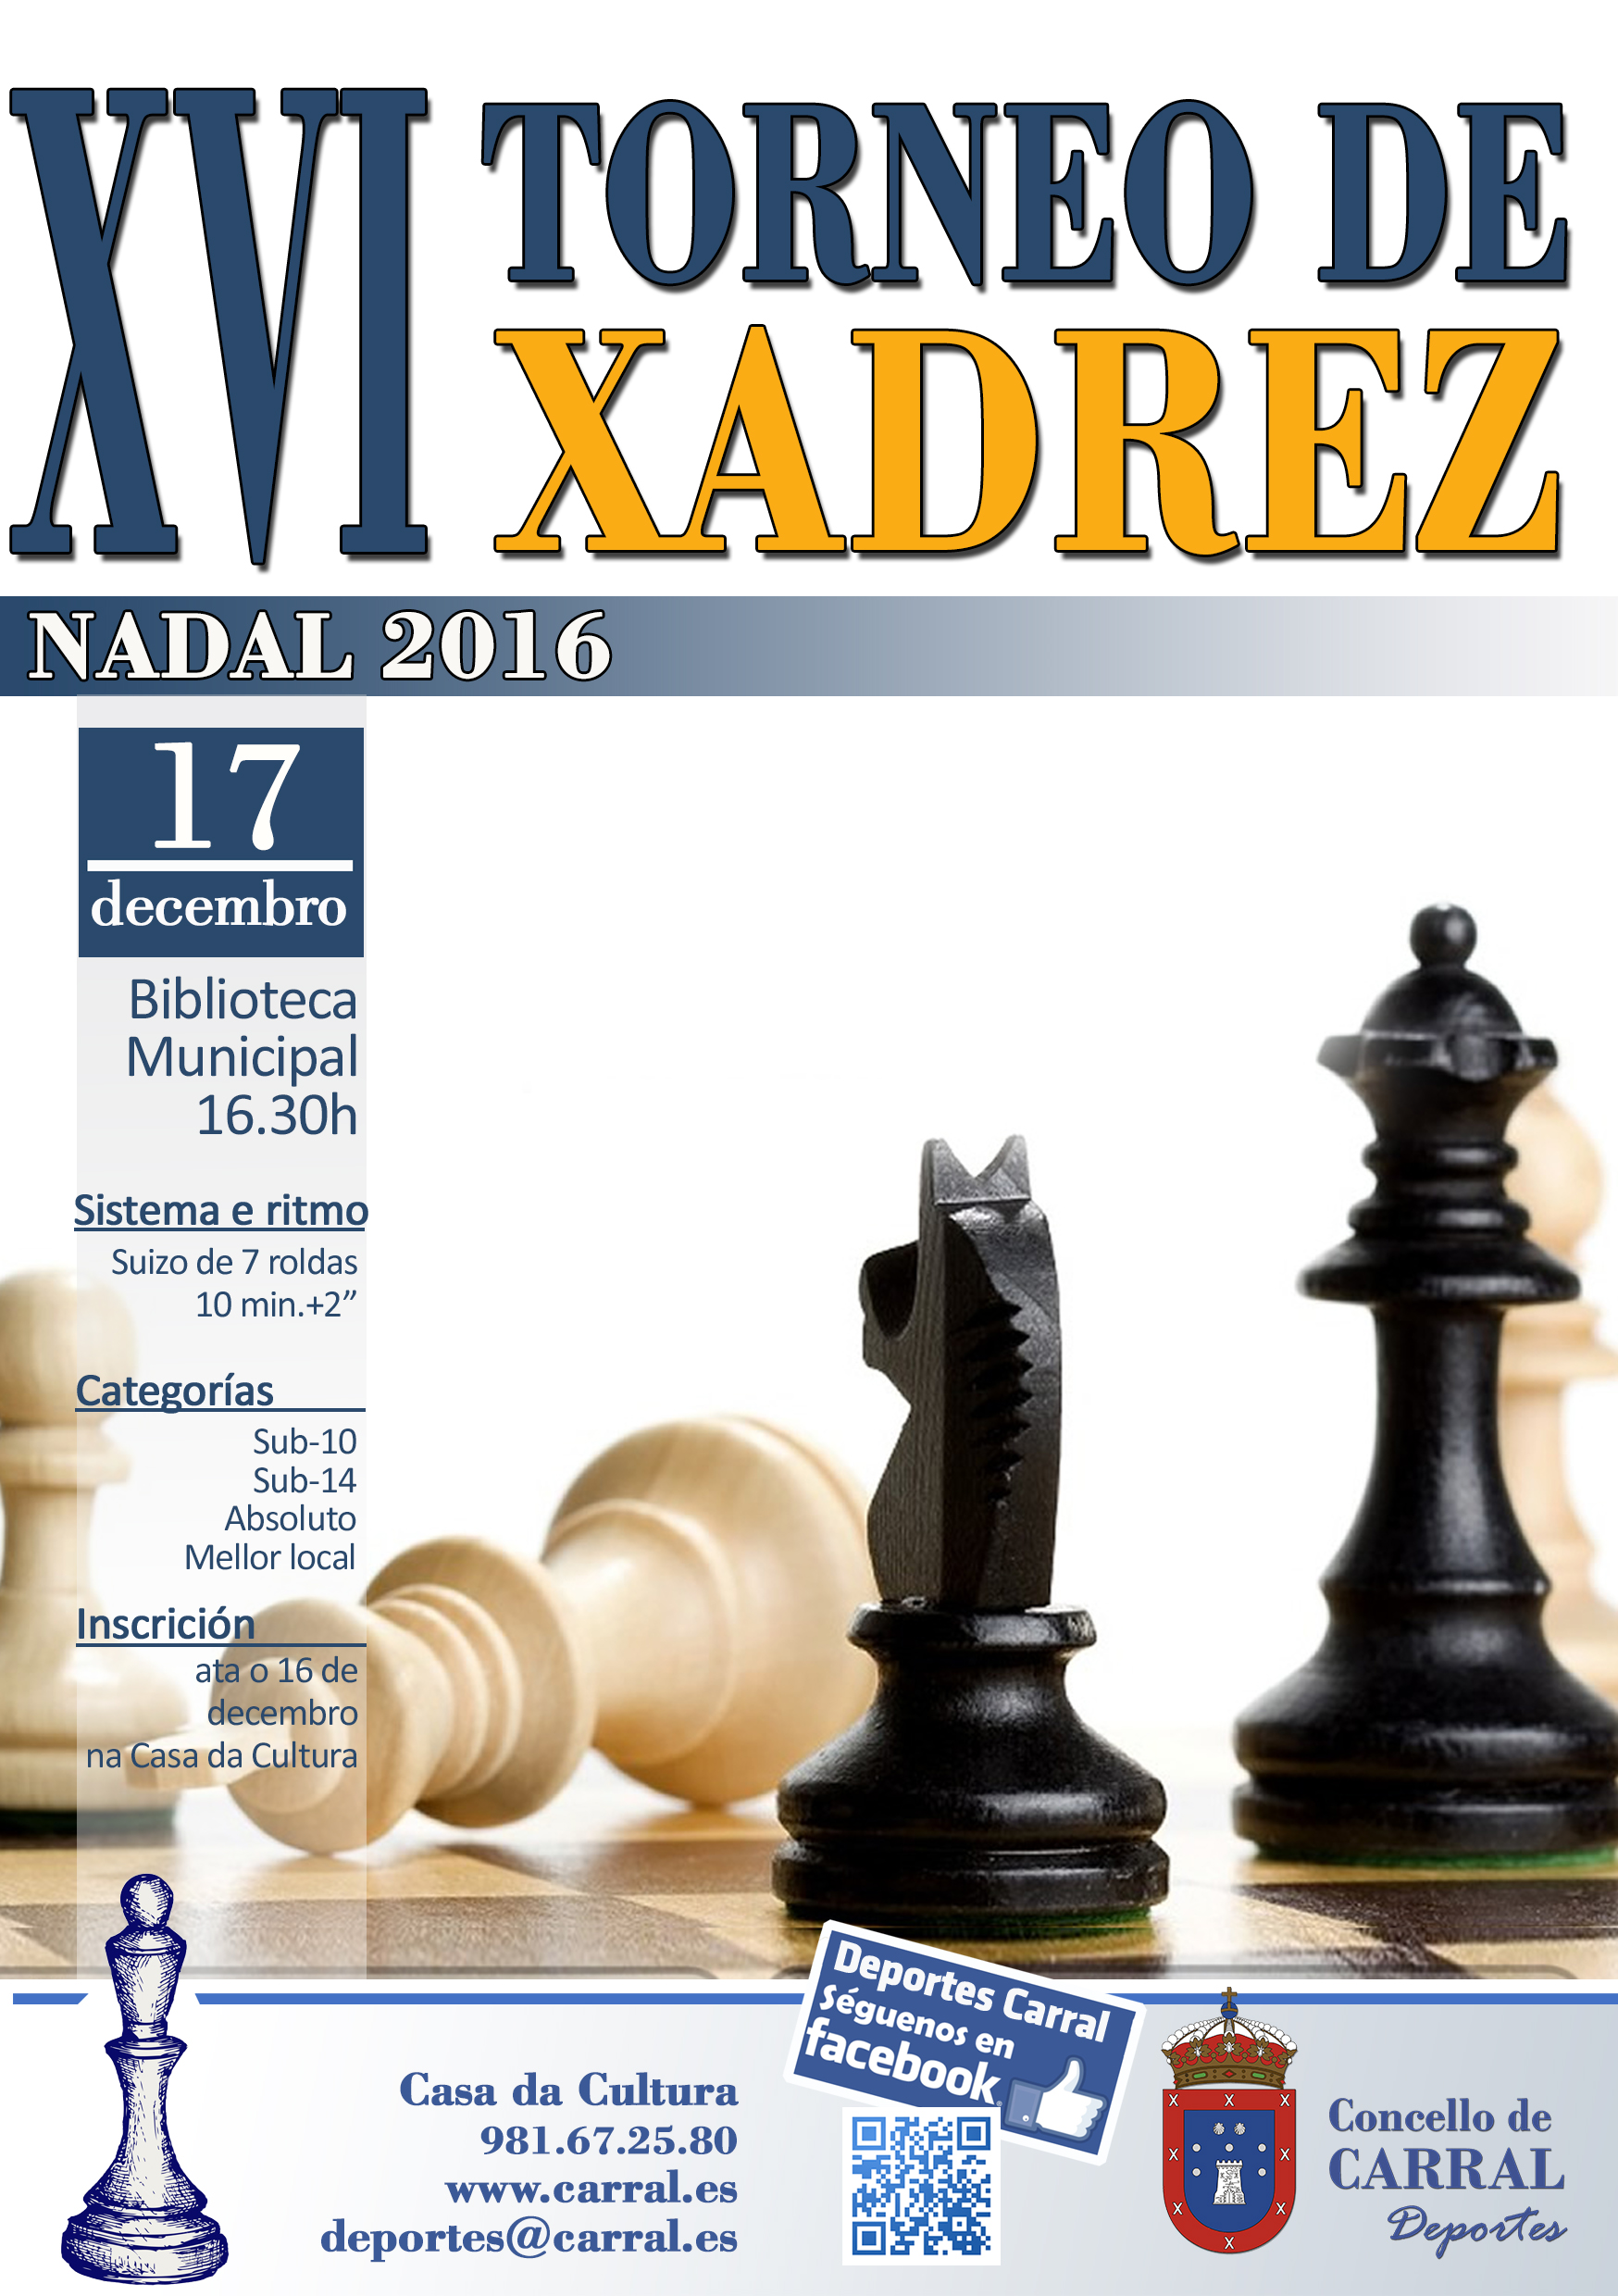 XVI Torneo Xadrez Nadal 2016 en Carral